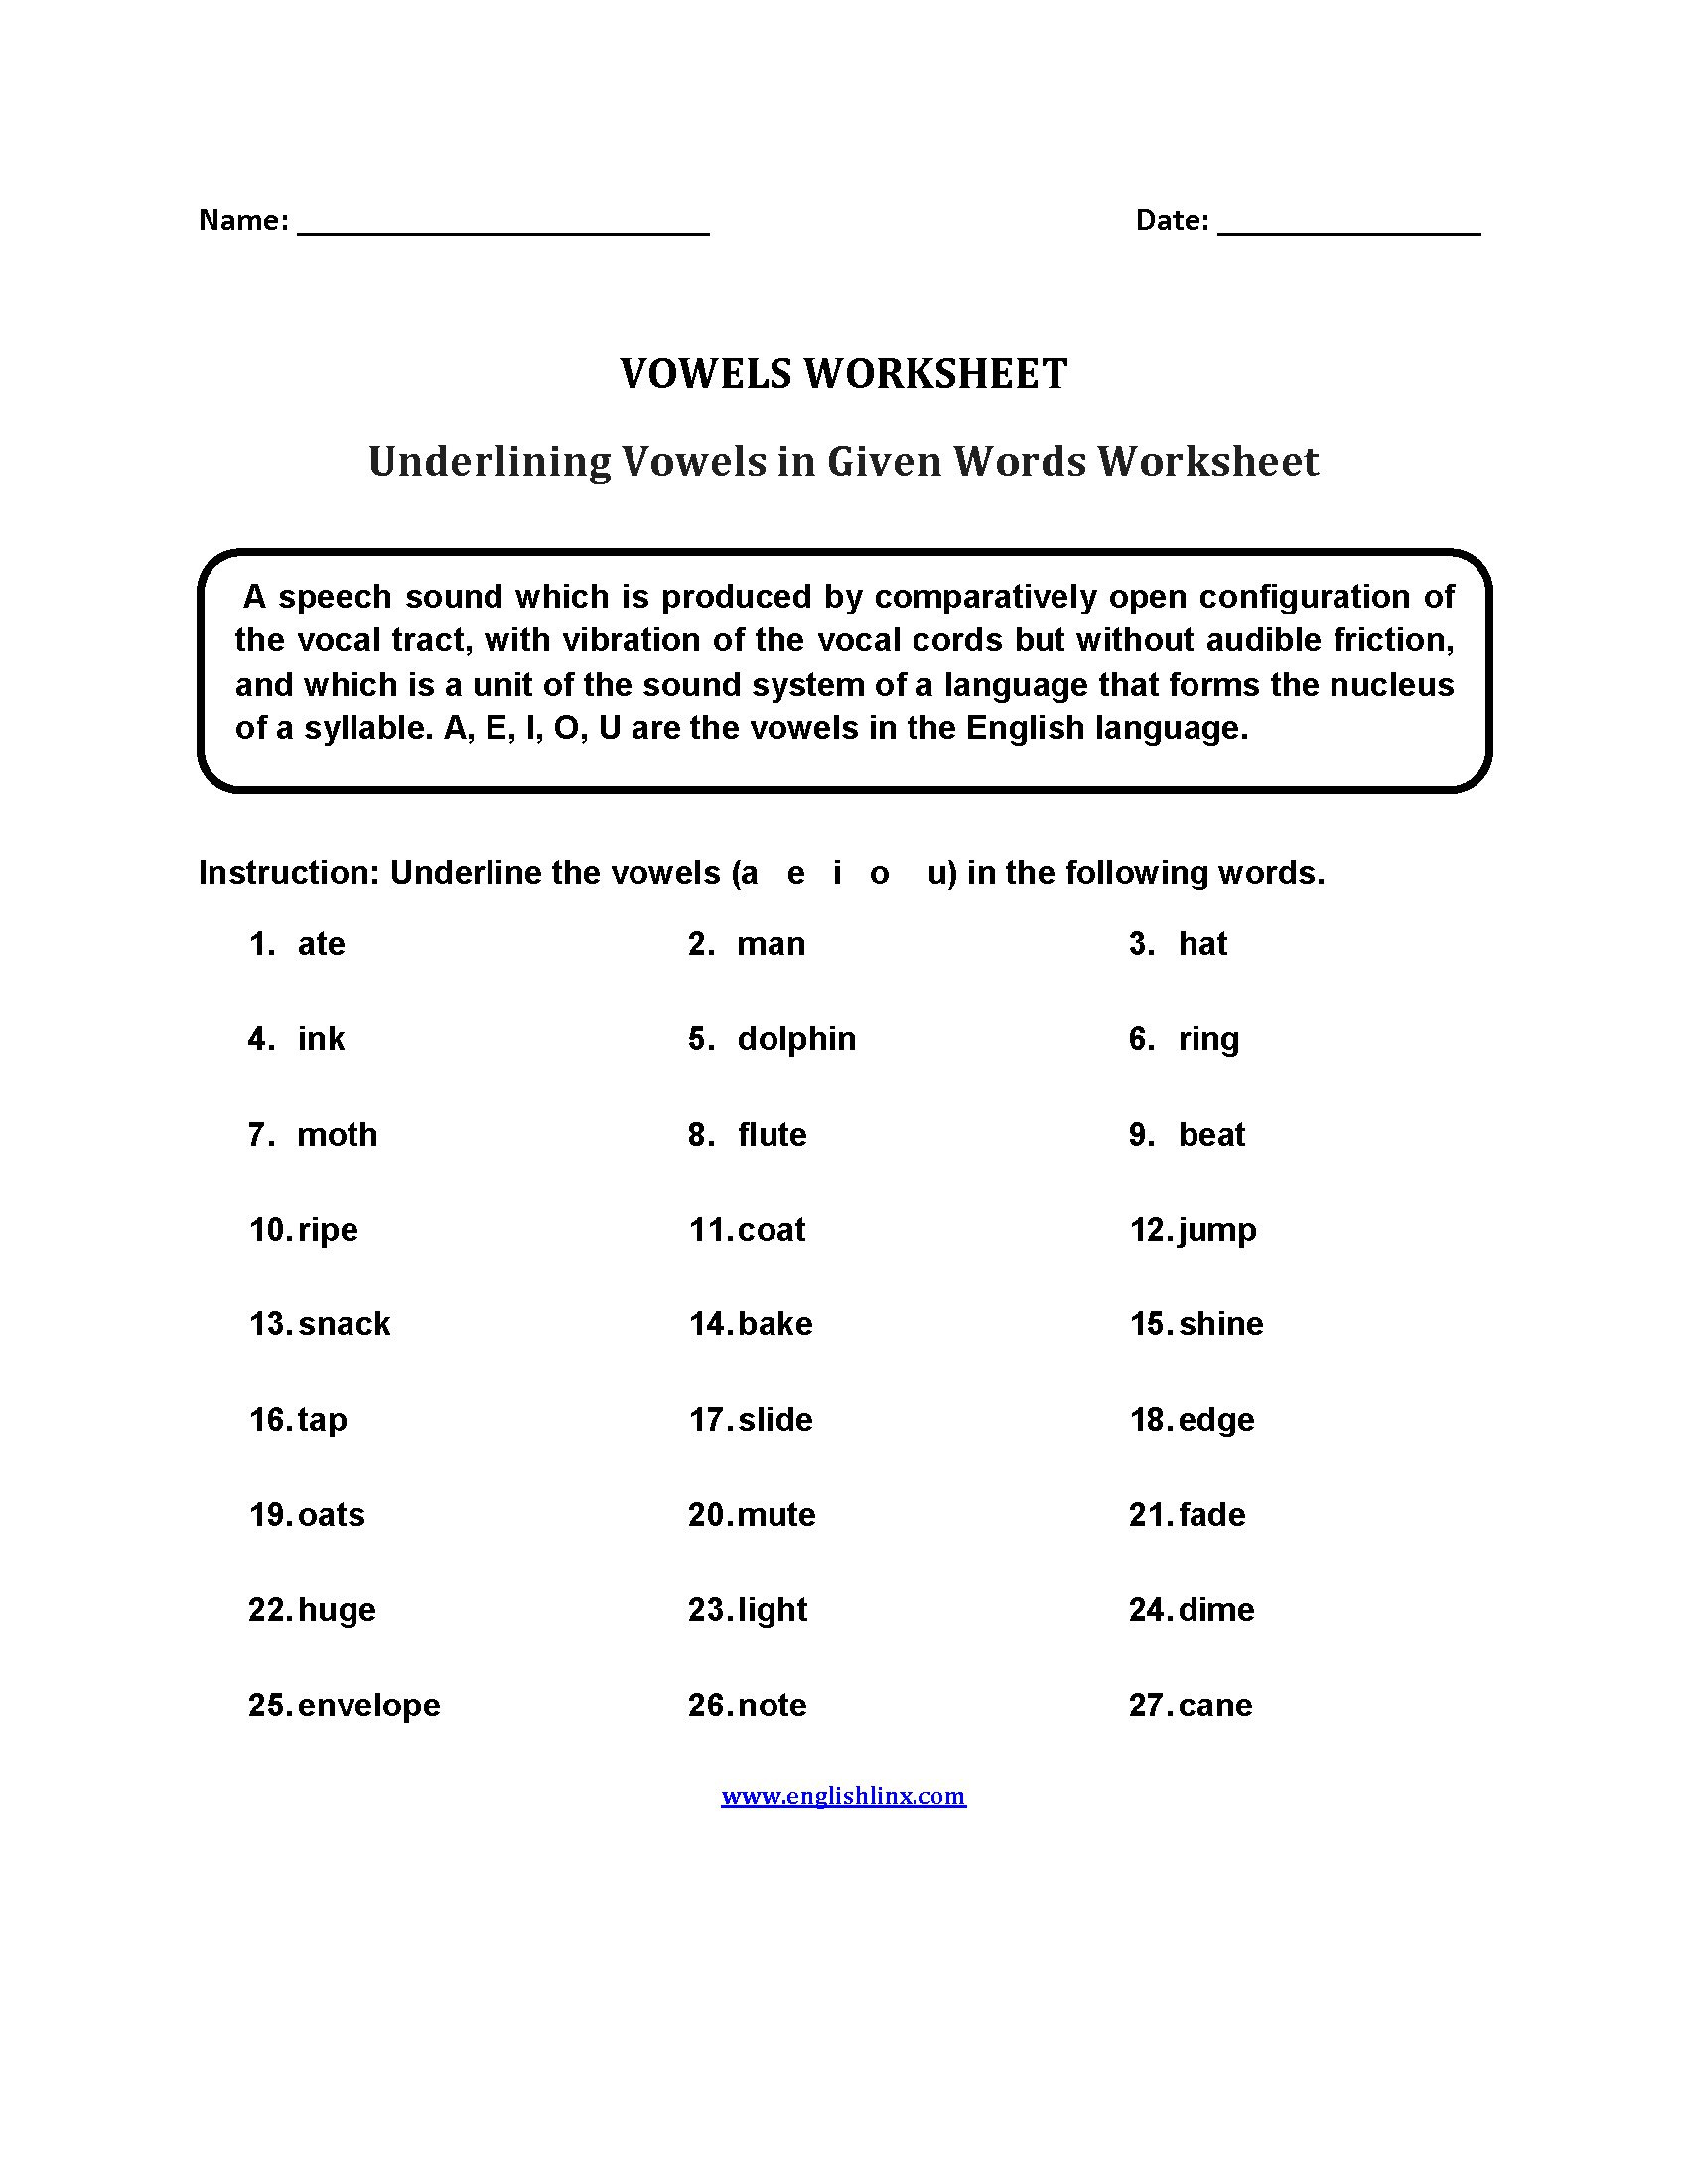 Underlining Vowels in Given Words Worksheets